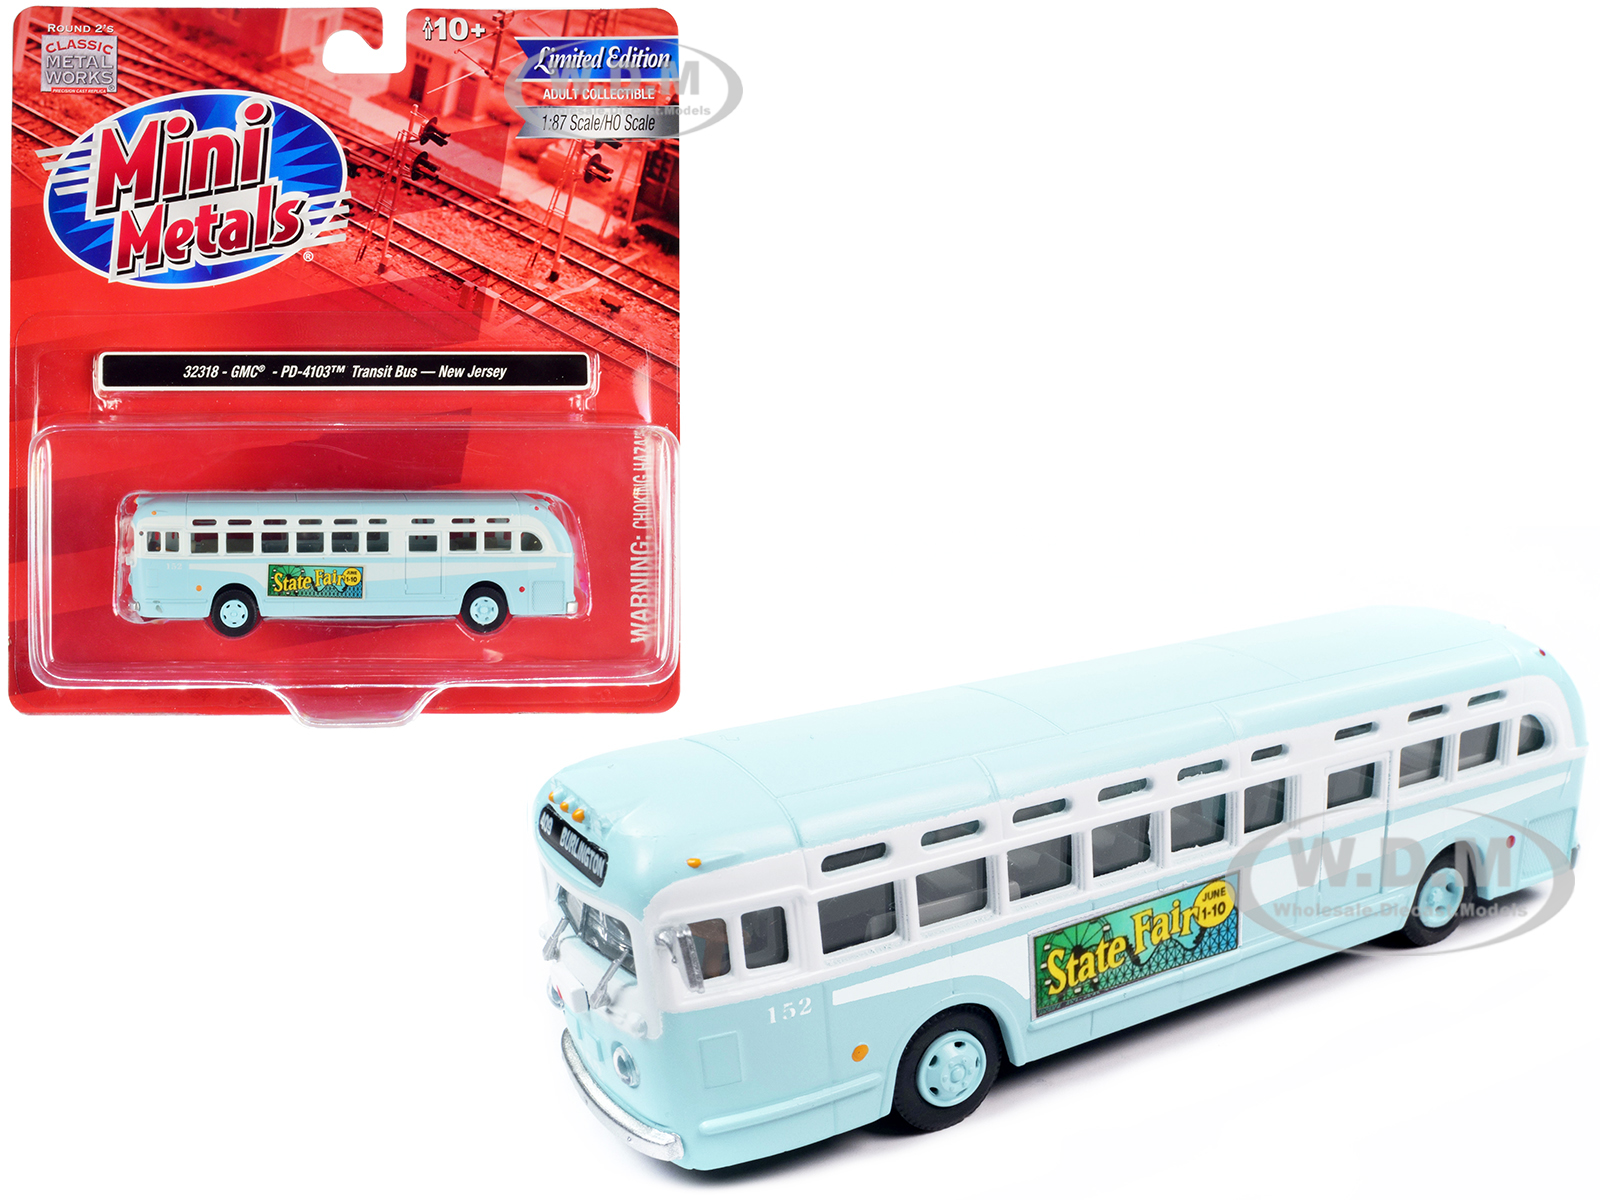 GMC PD-4103 Transit Bus 152 Light Blue Burlington New Jersey 1/87 (HO) Scale Model By Classic Metal Works